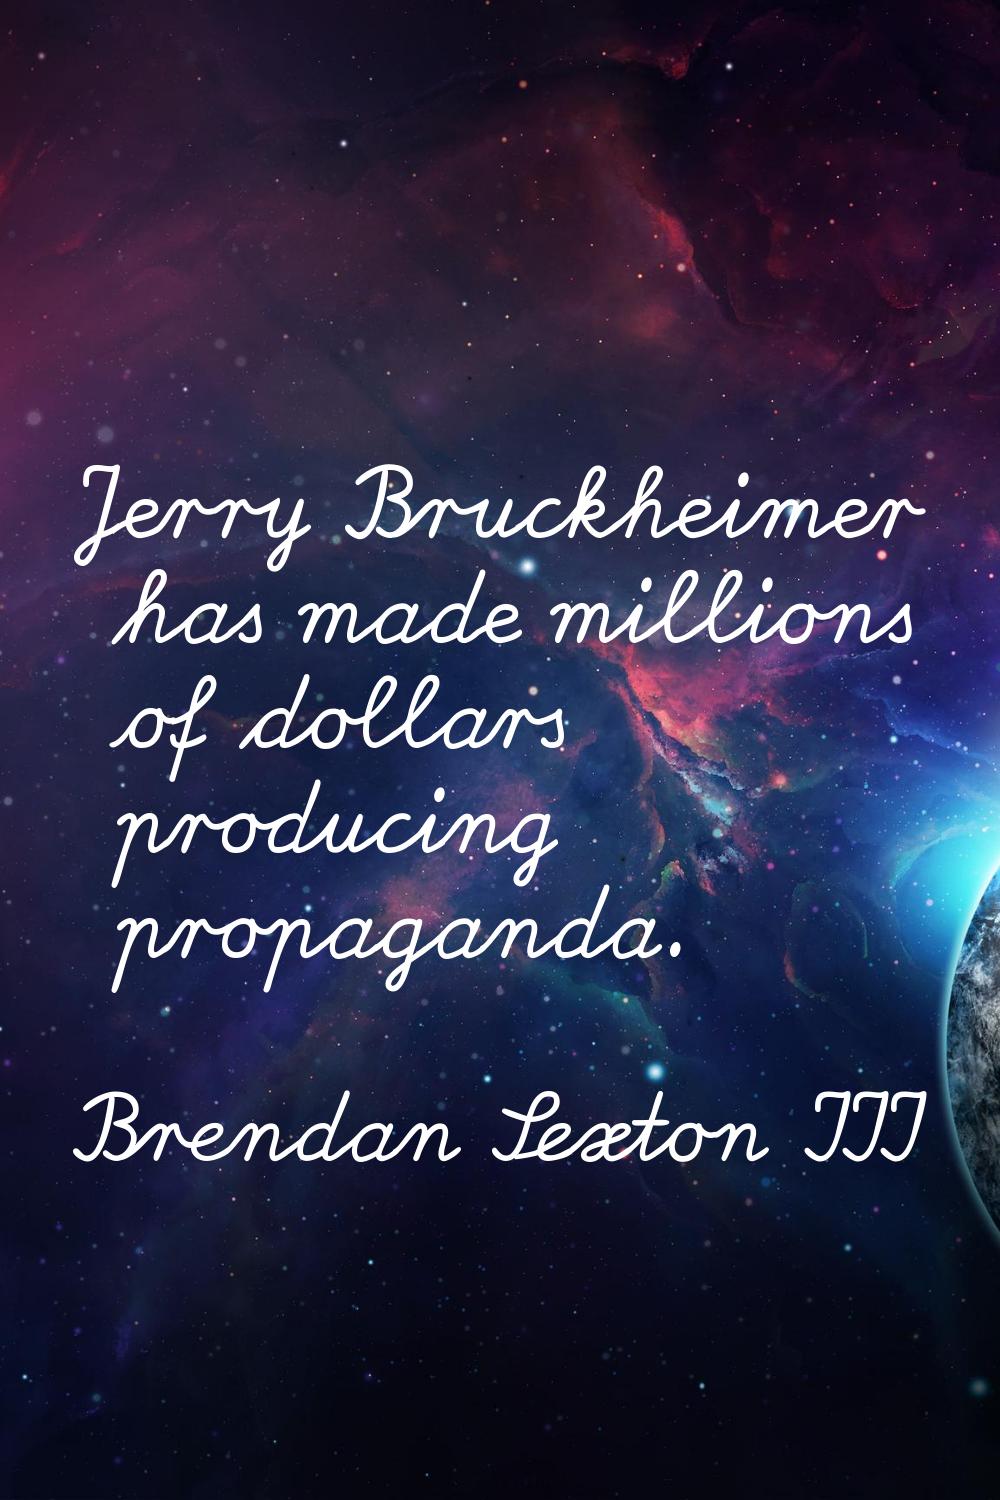 Jerry Bruckheimer has made millions of dollars producing propaganda.